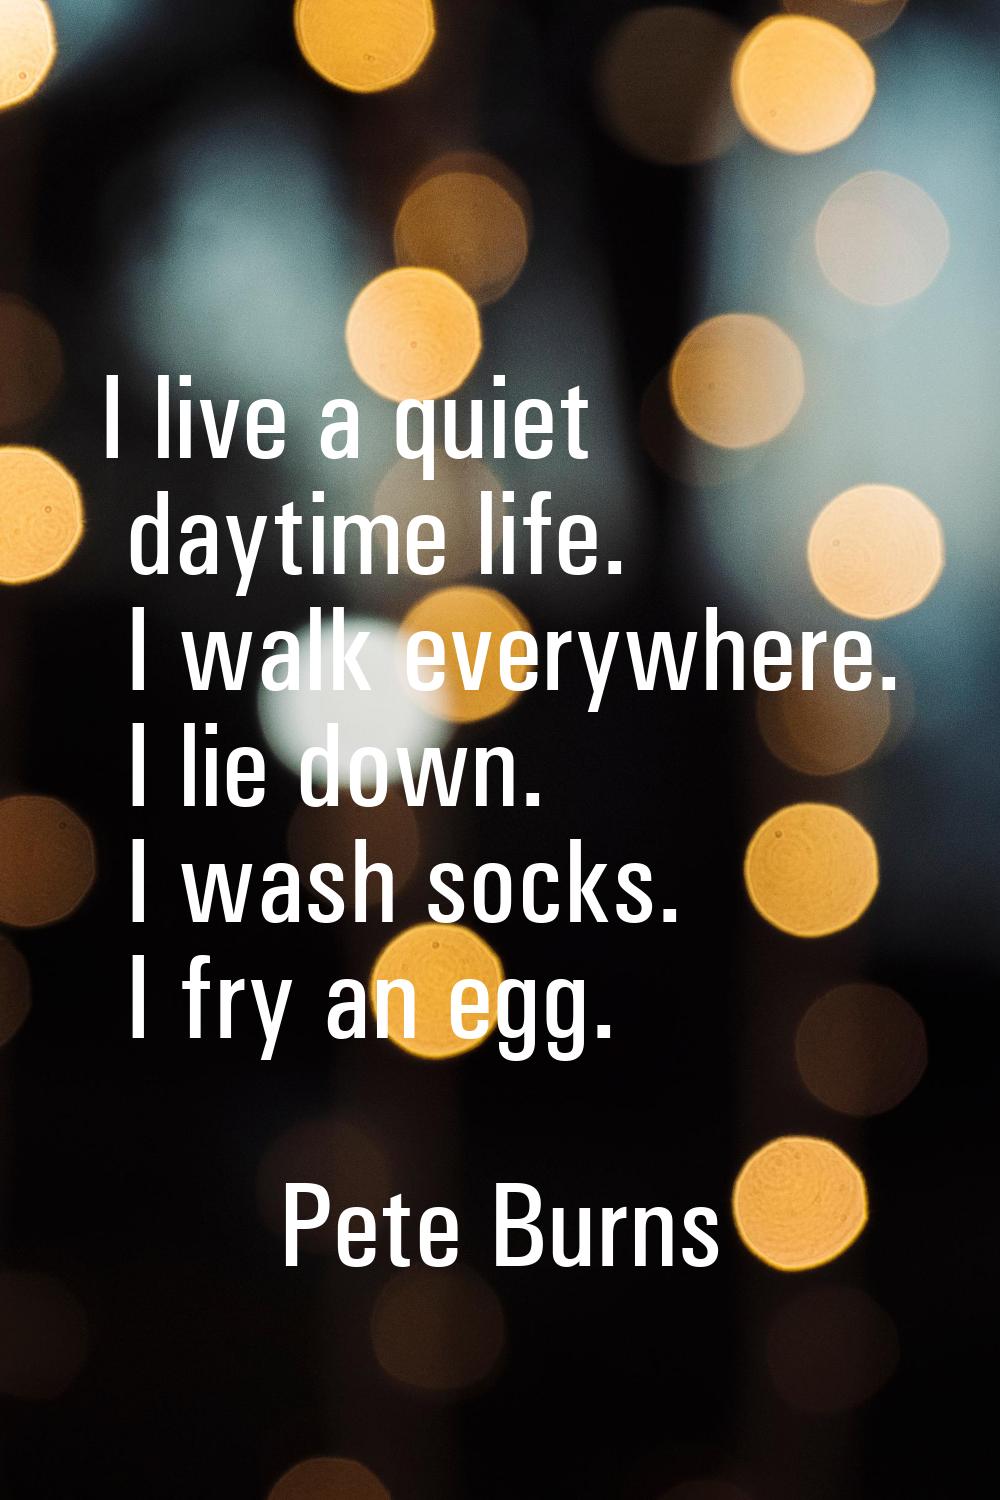 I live a quiet daytime life. I walk everywhere. I lie down. I wash socks. I fry an egg.